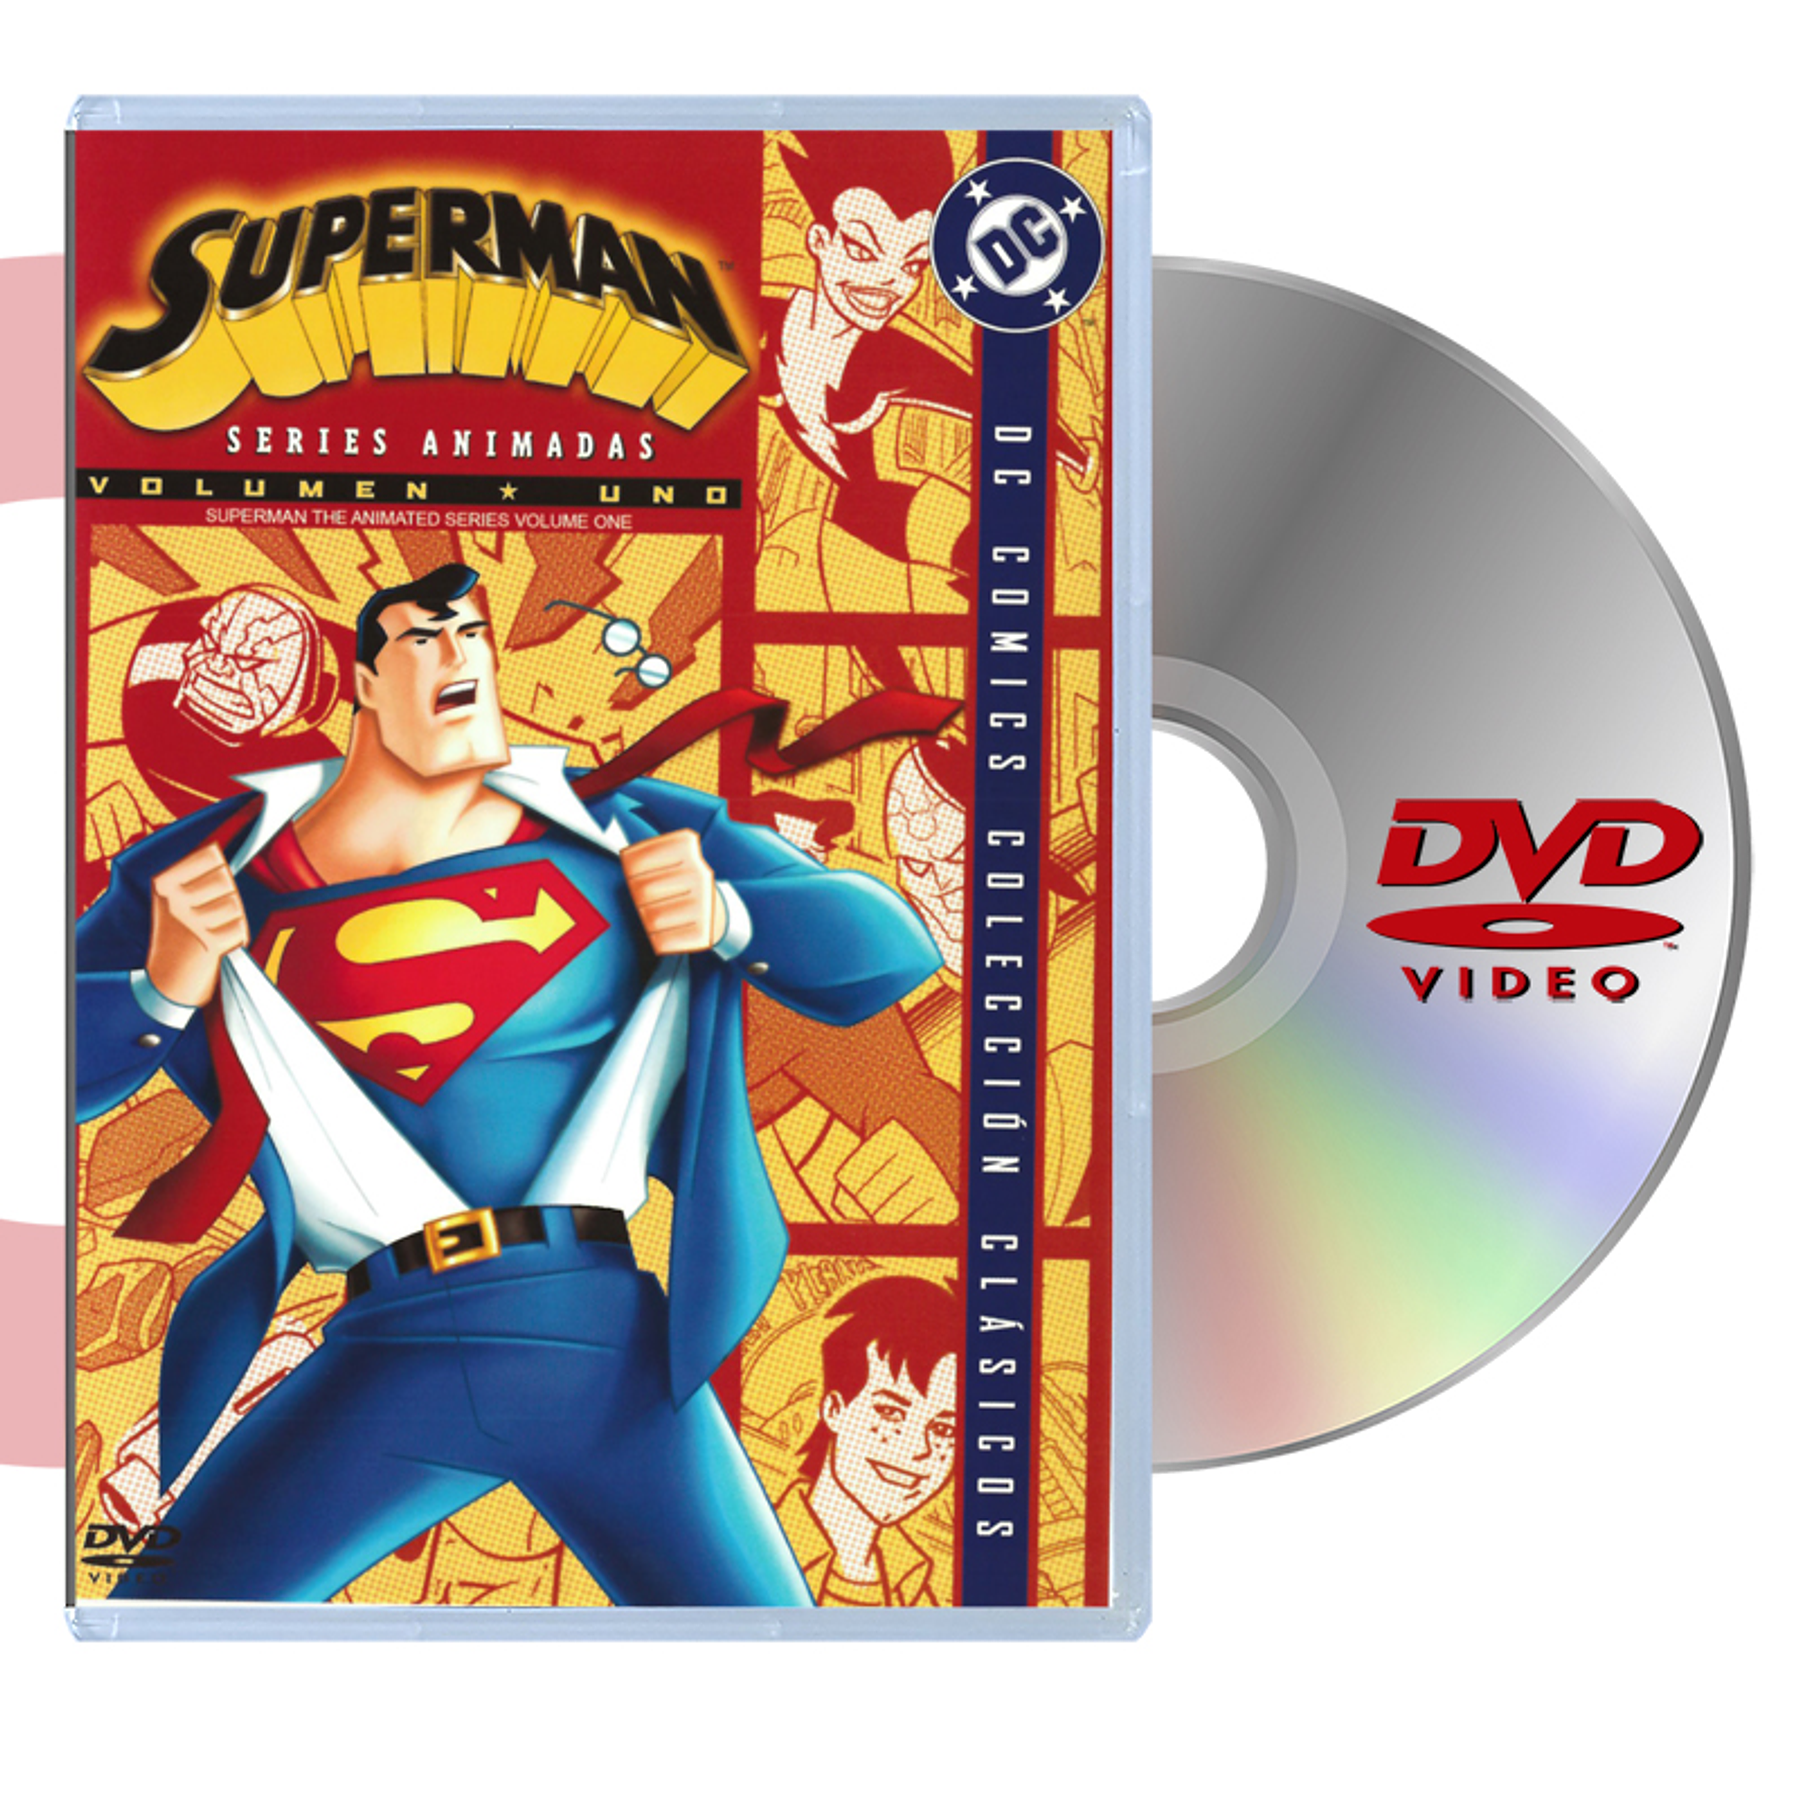 DVD SUPERMAN SERIES ANIMADAS VOL 1